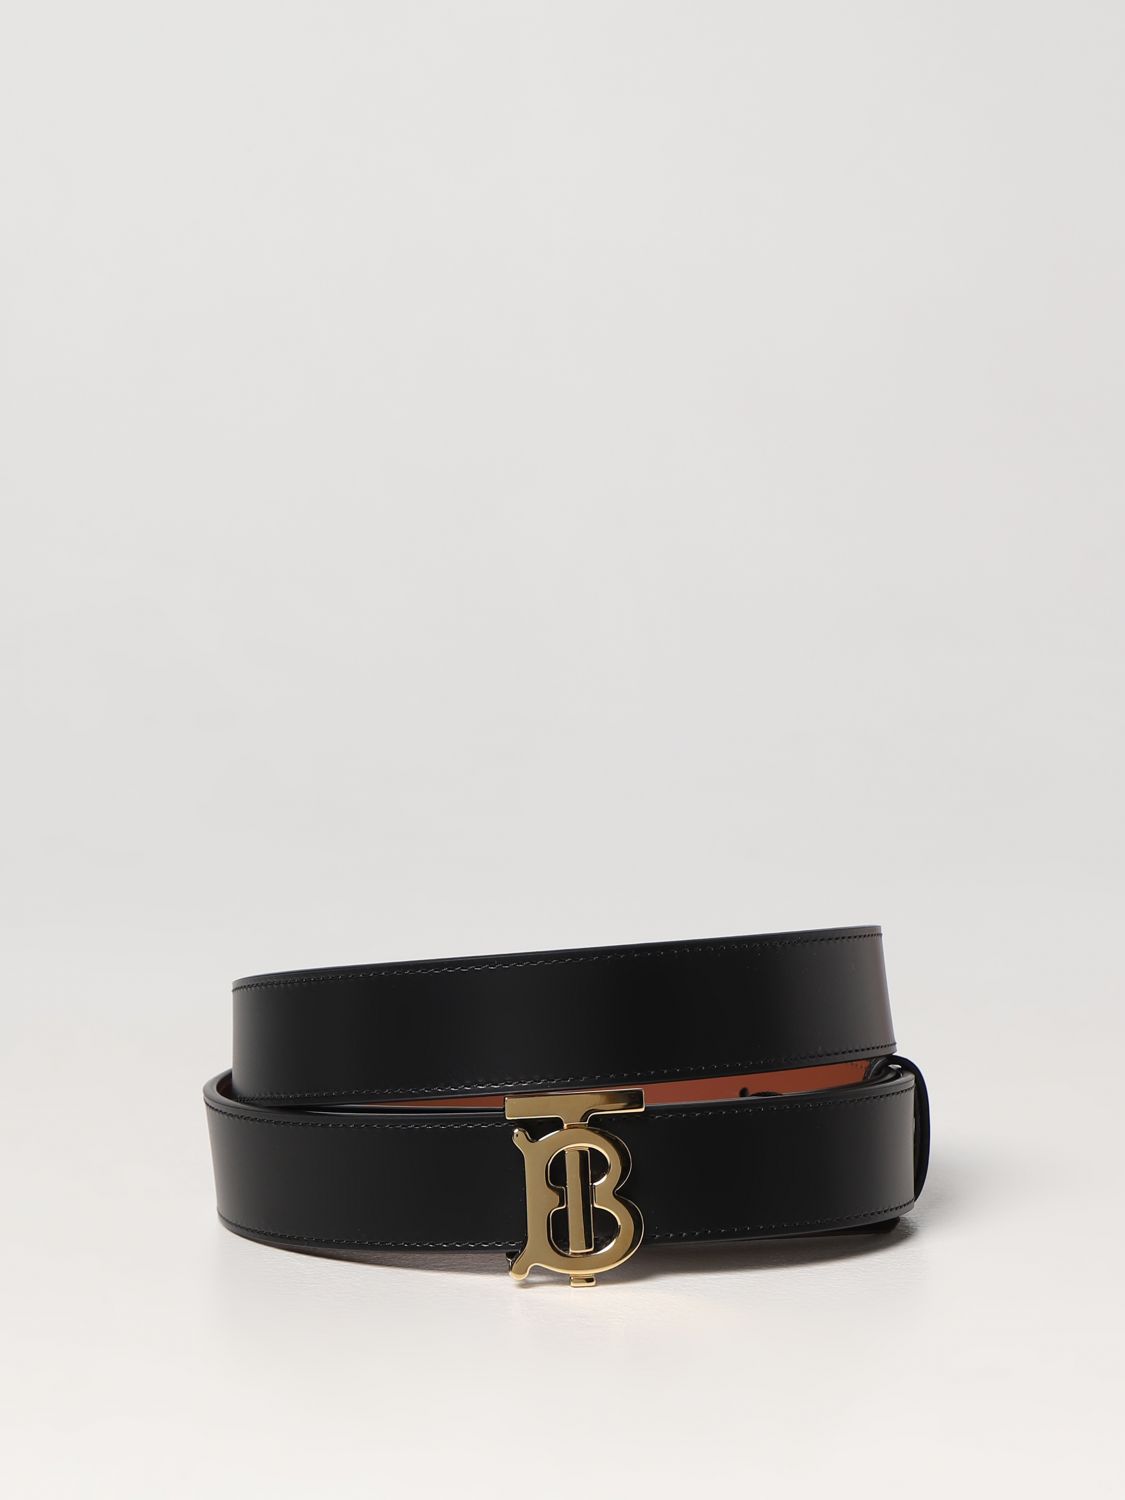 Burberry TB-monogram leather belt, Black